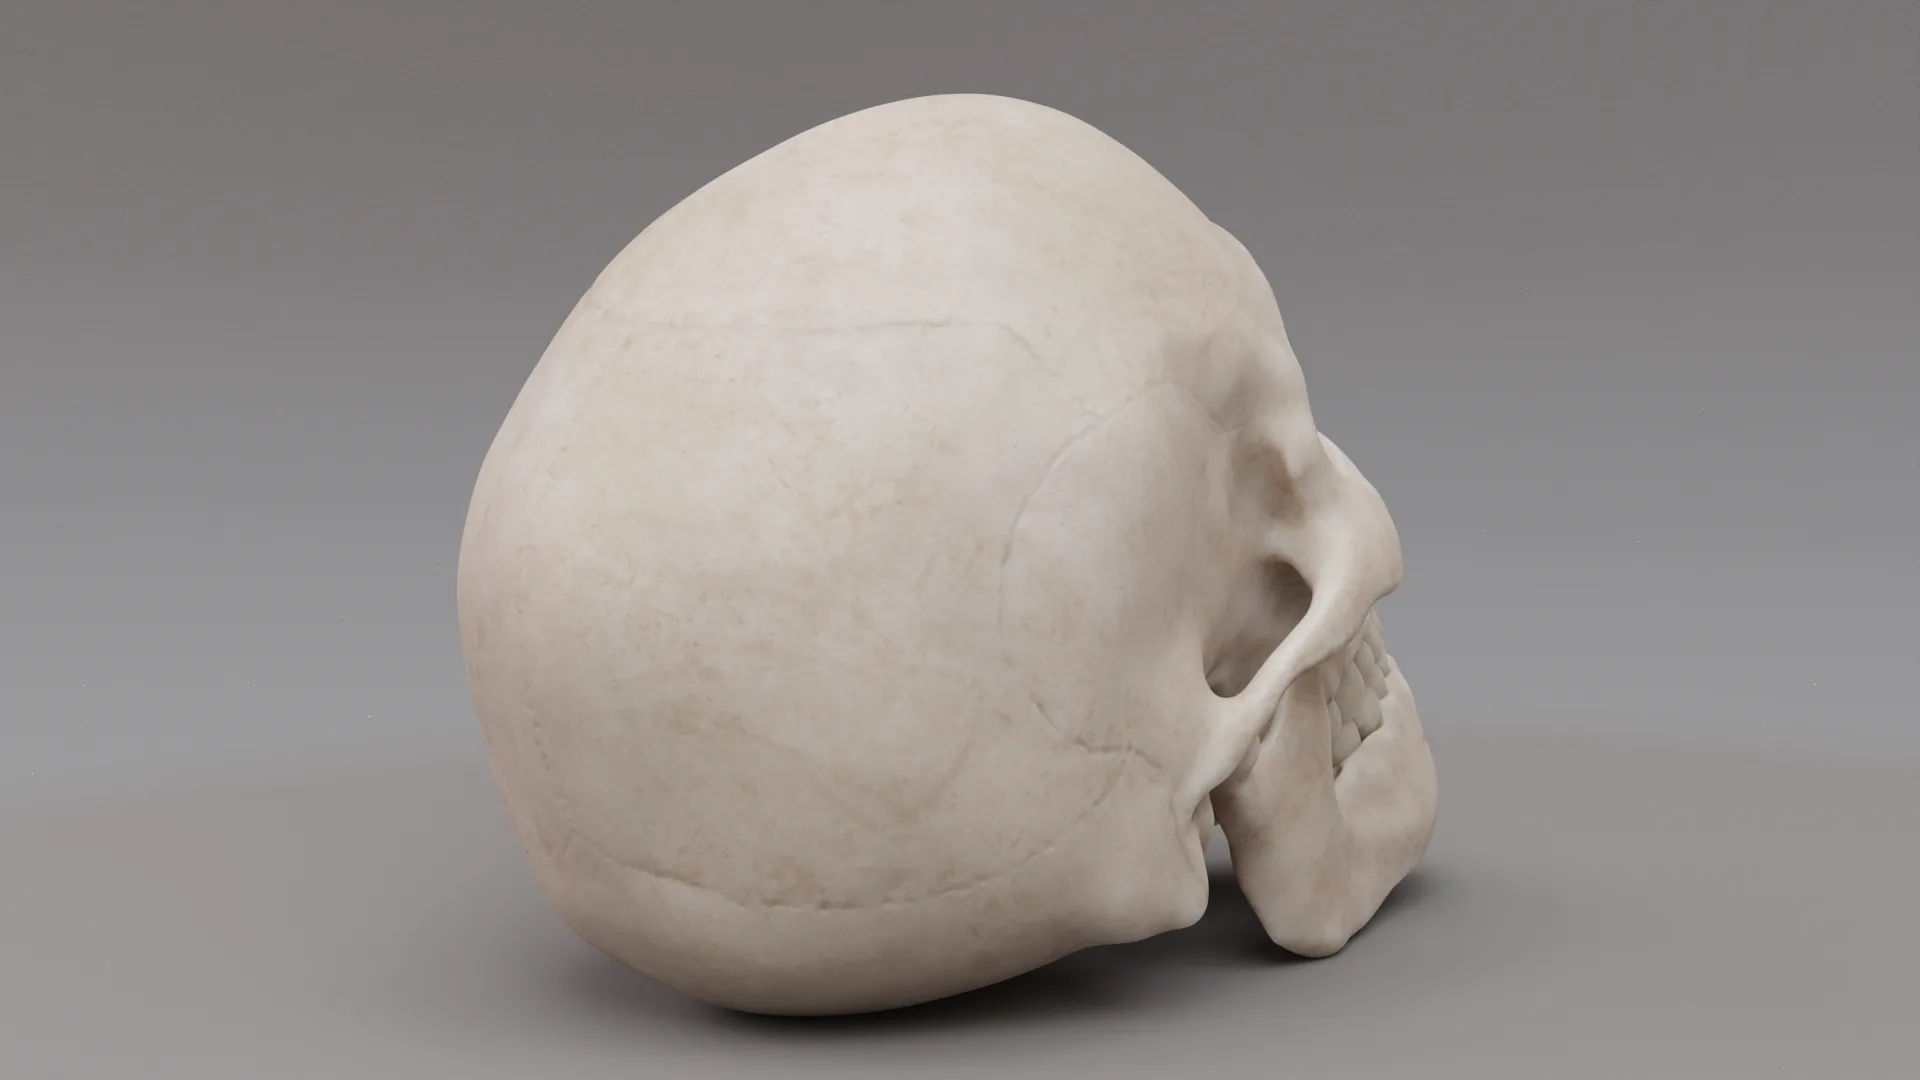 Photorealistic Human Skull